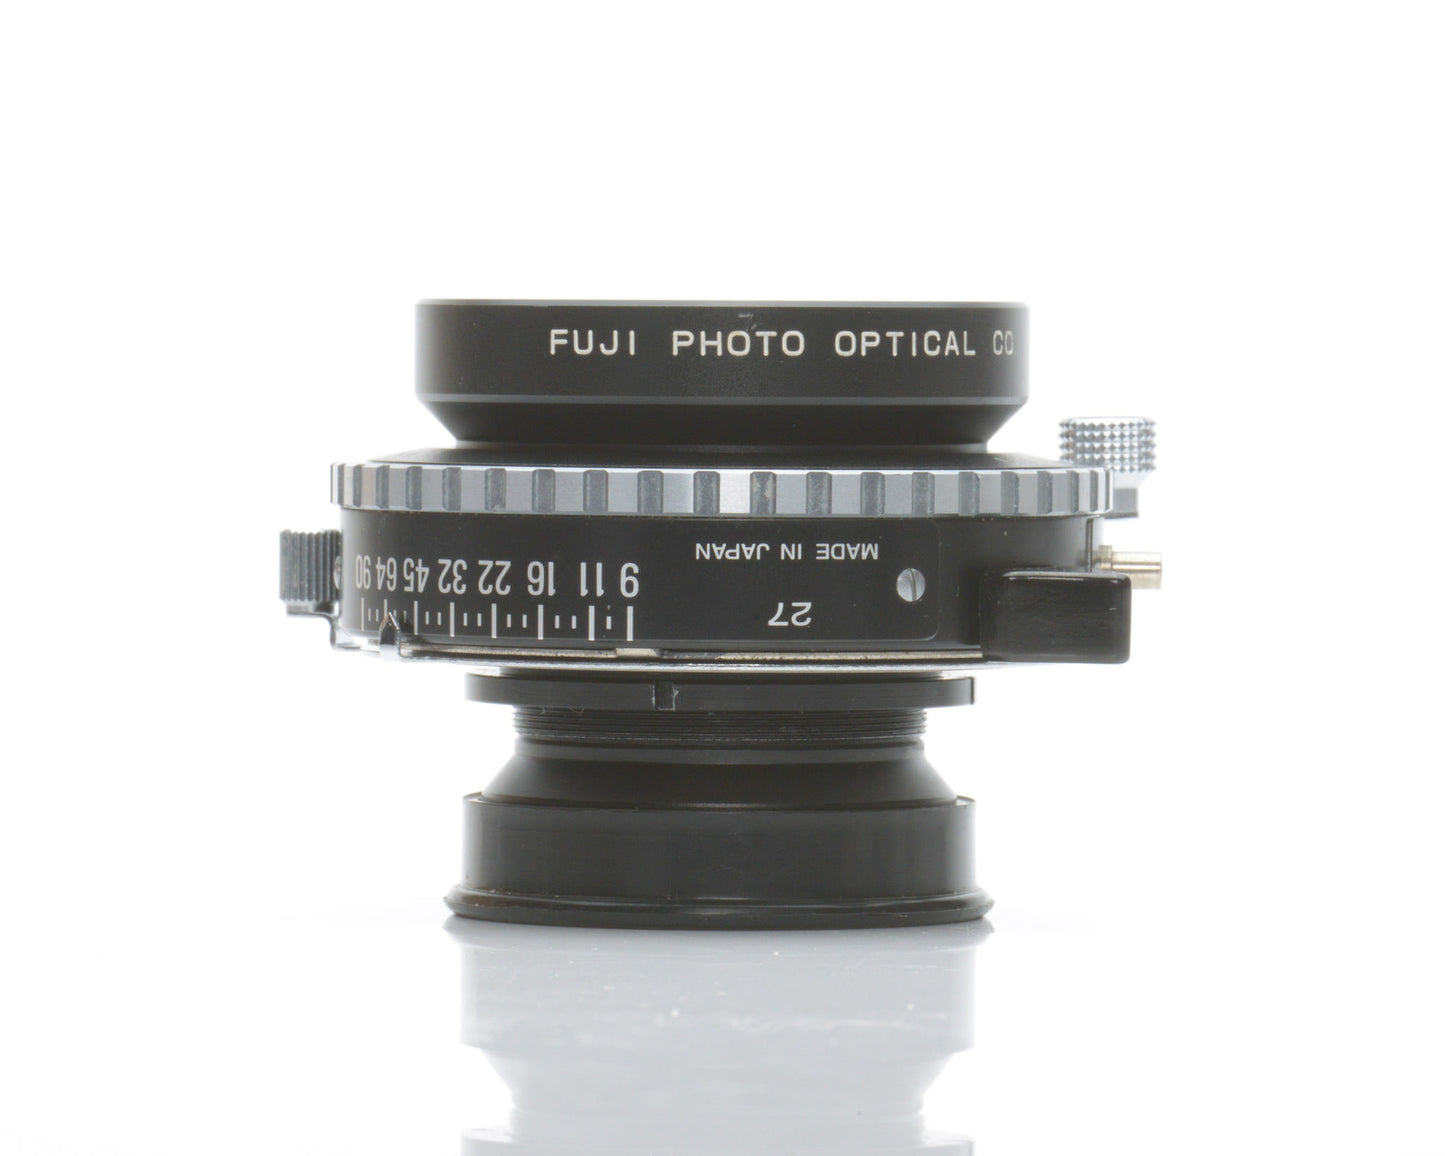 Fuji Fujifilm Fujinon A 180mm f/9 4x5 Lens